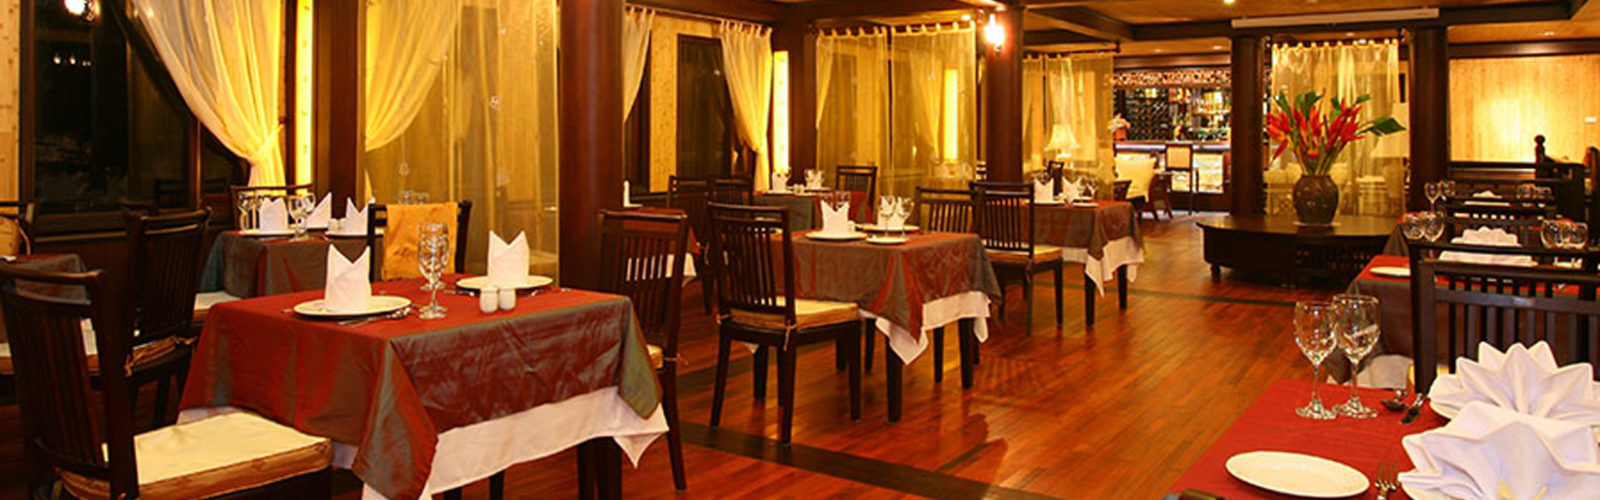 the-jasmine-halong-bay-restaurant